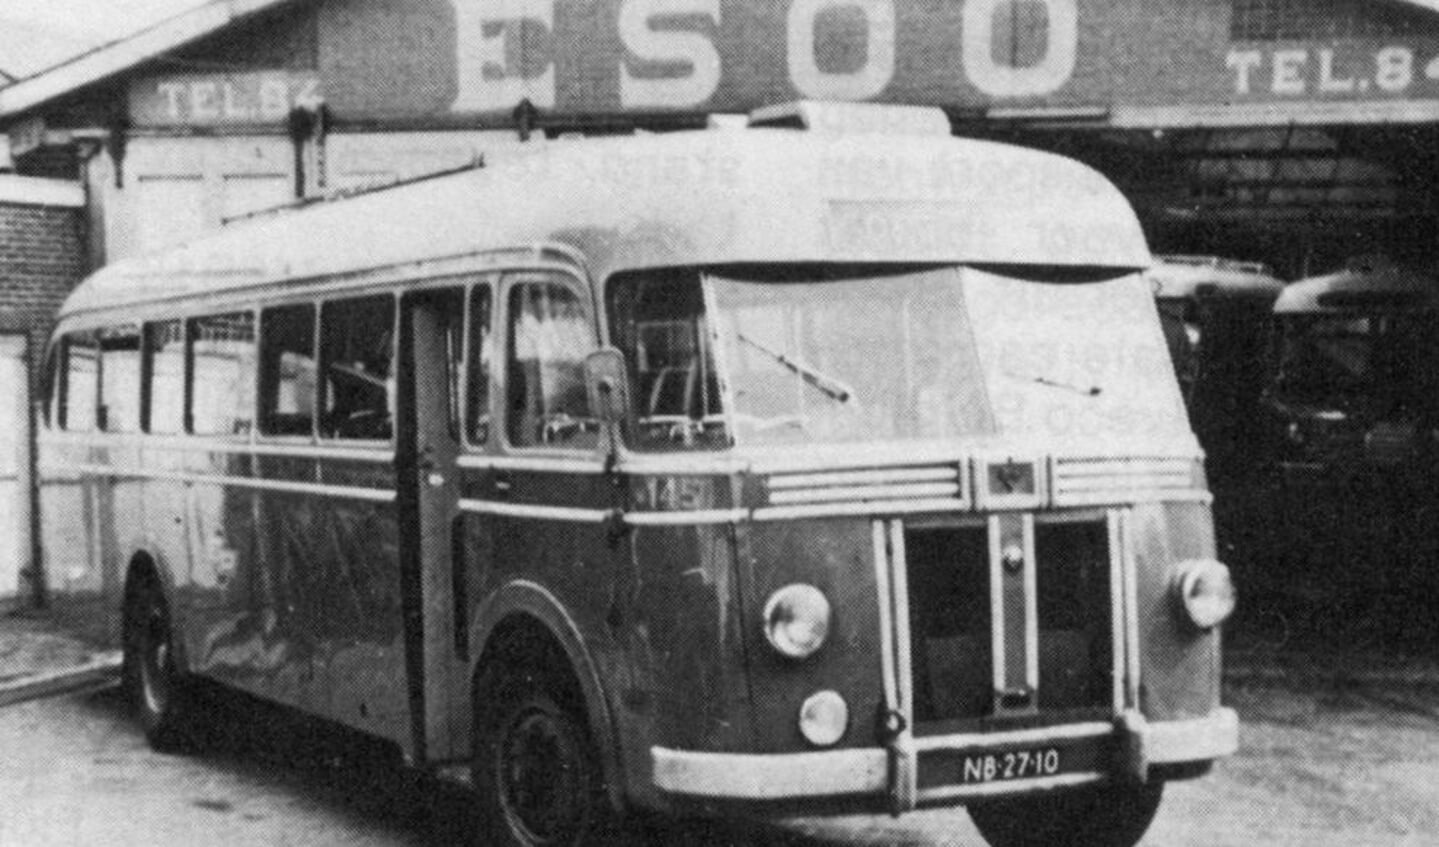 Crossley-bus van de NV Eerste Sliedrechtse Omnibus Onderneming (ESOO).